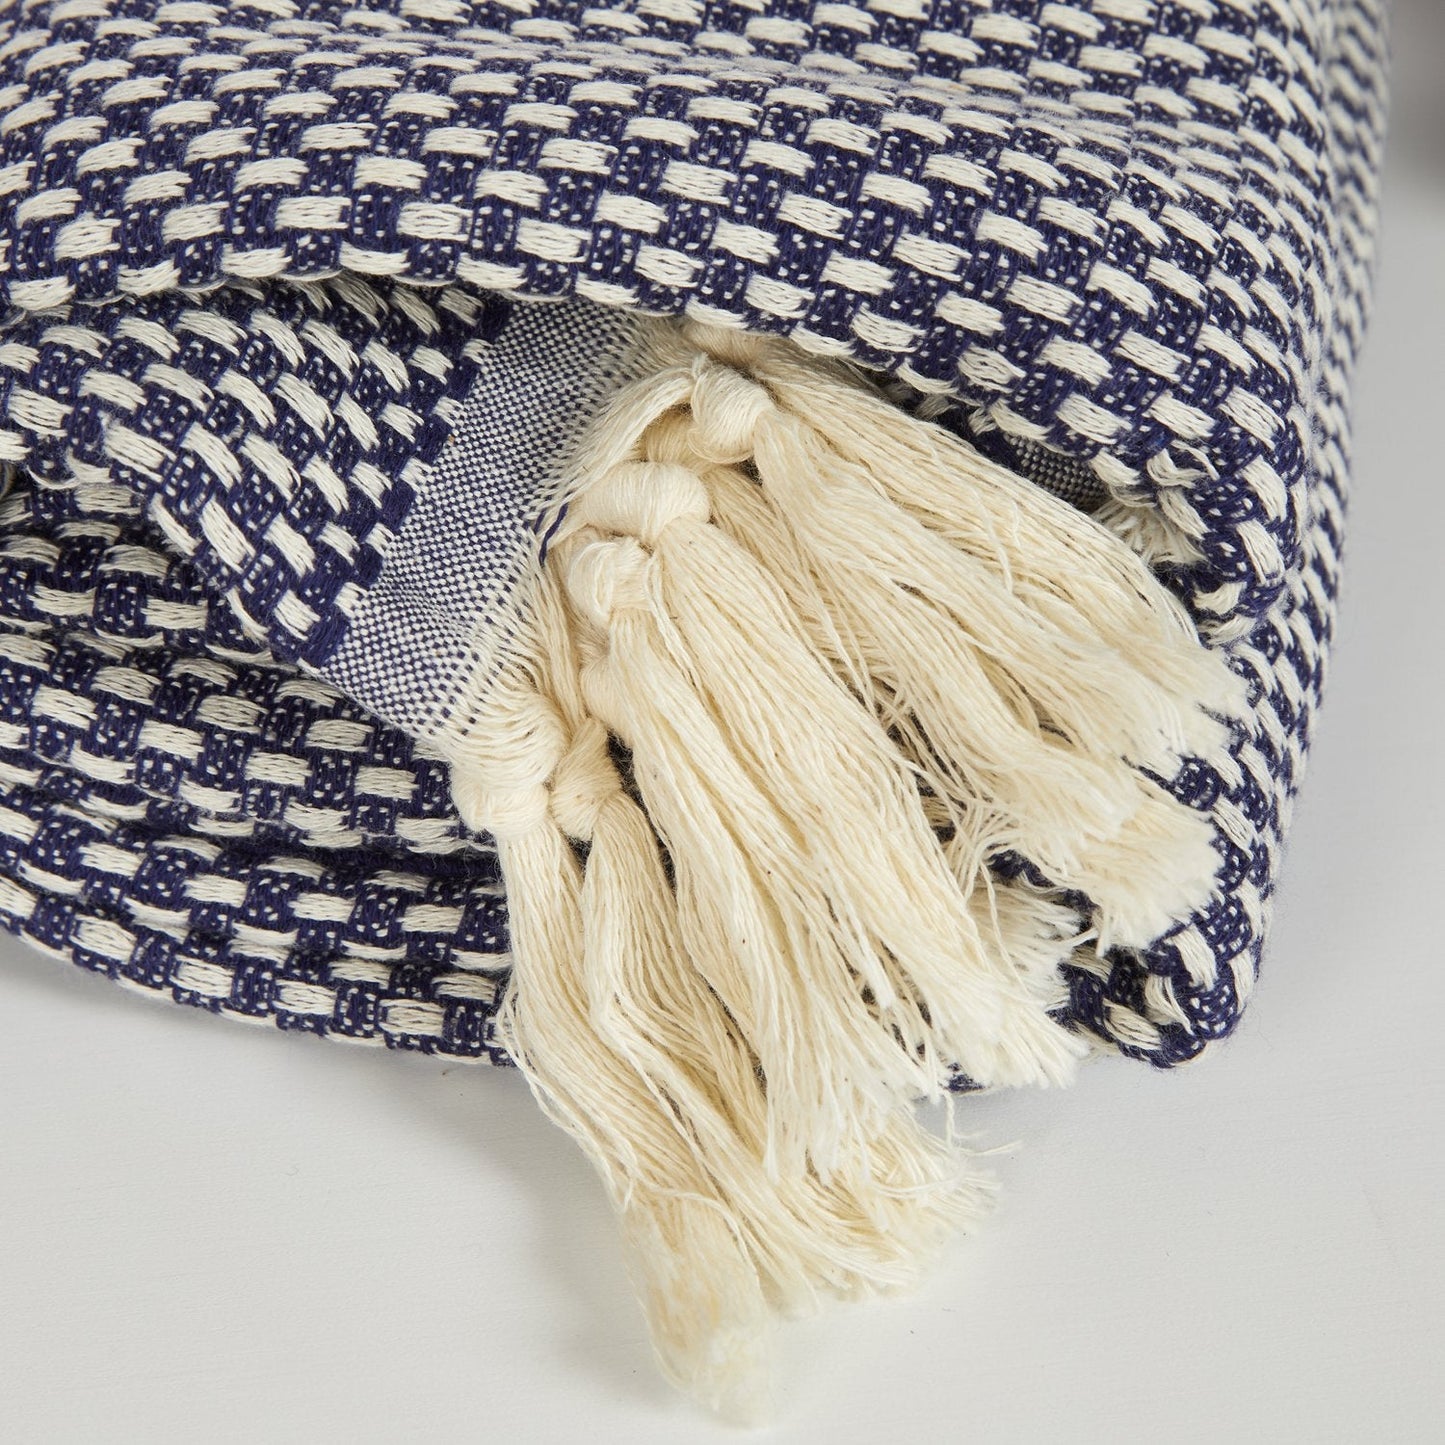 Cross Hatch Warm Woven Blankets - The Riviera Towel Company